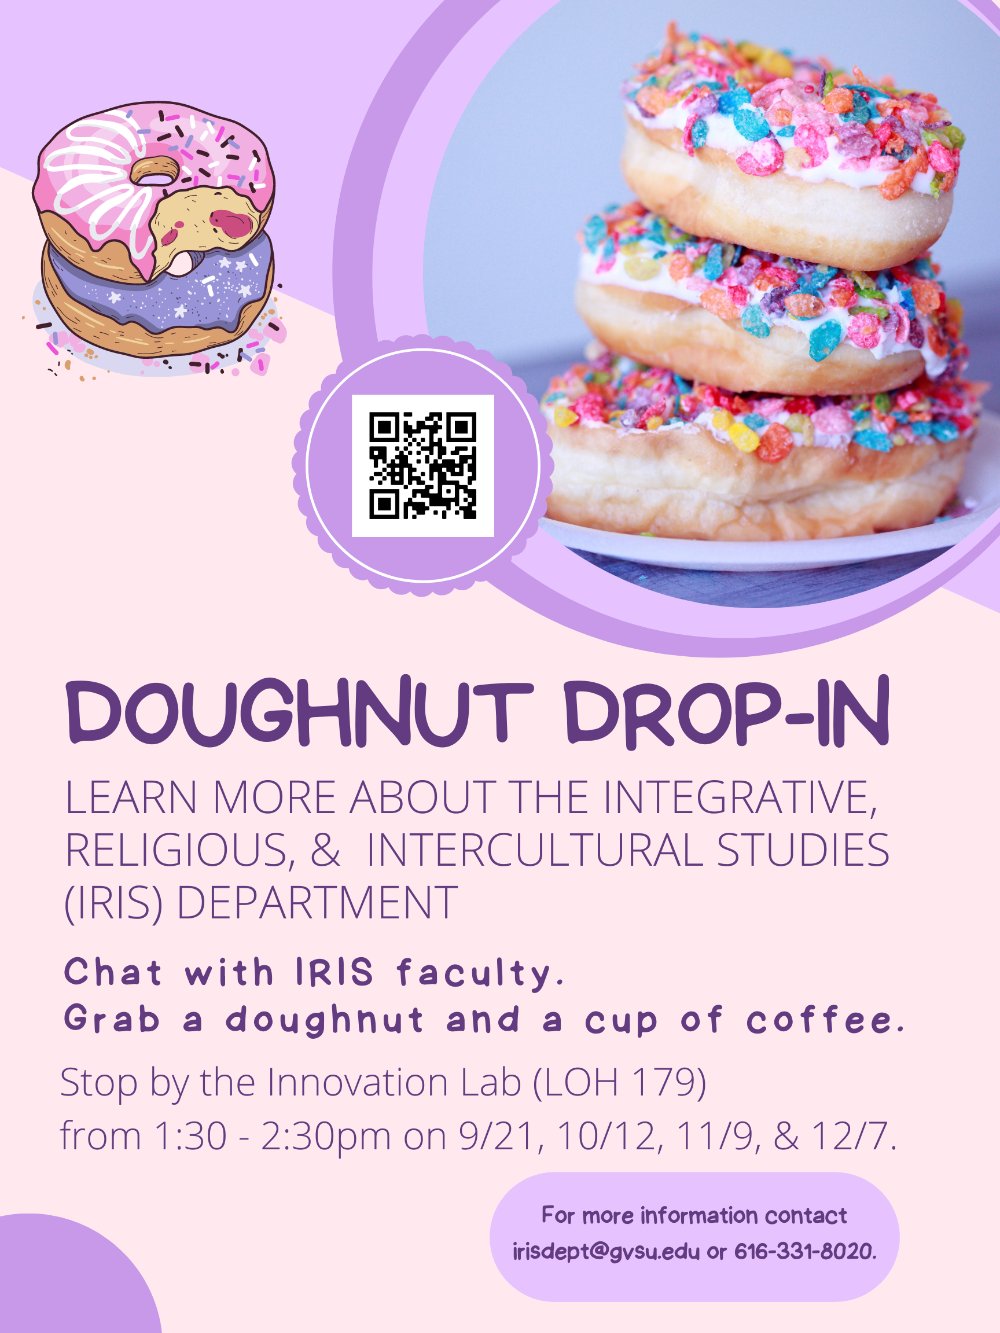 bright colors with doughnuts advertising IRIS doughnut drop in